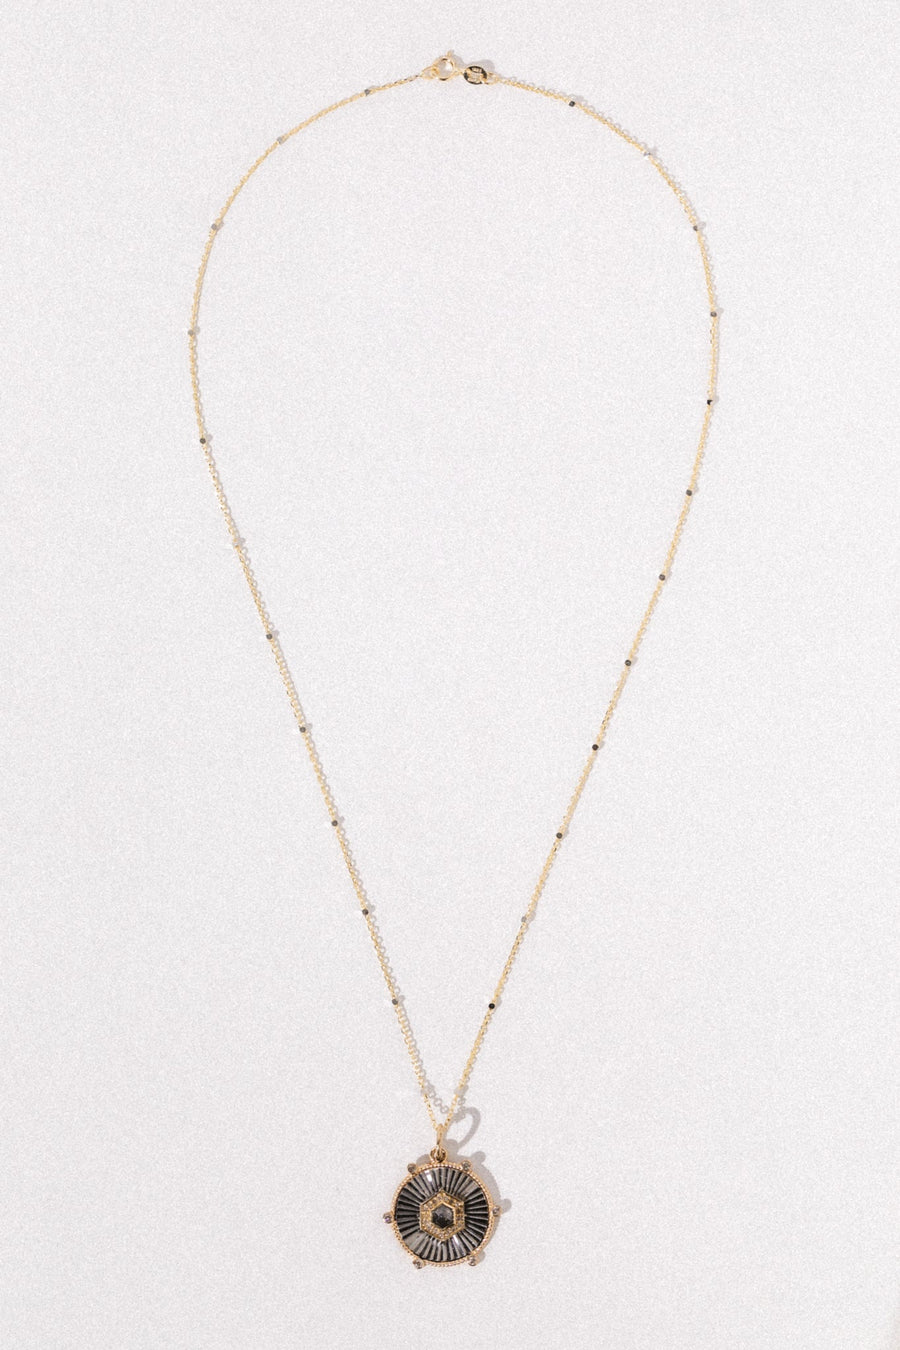 Tresor Jewelry 14kt Heart Center Pavé Diamond Necklace